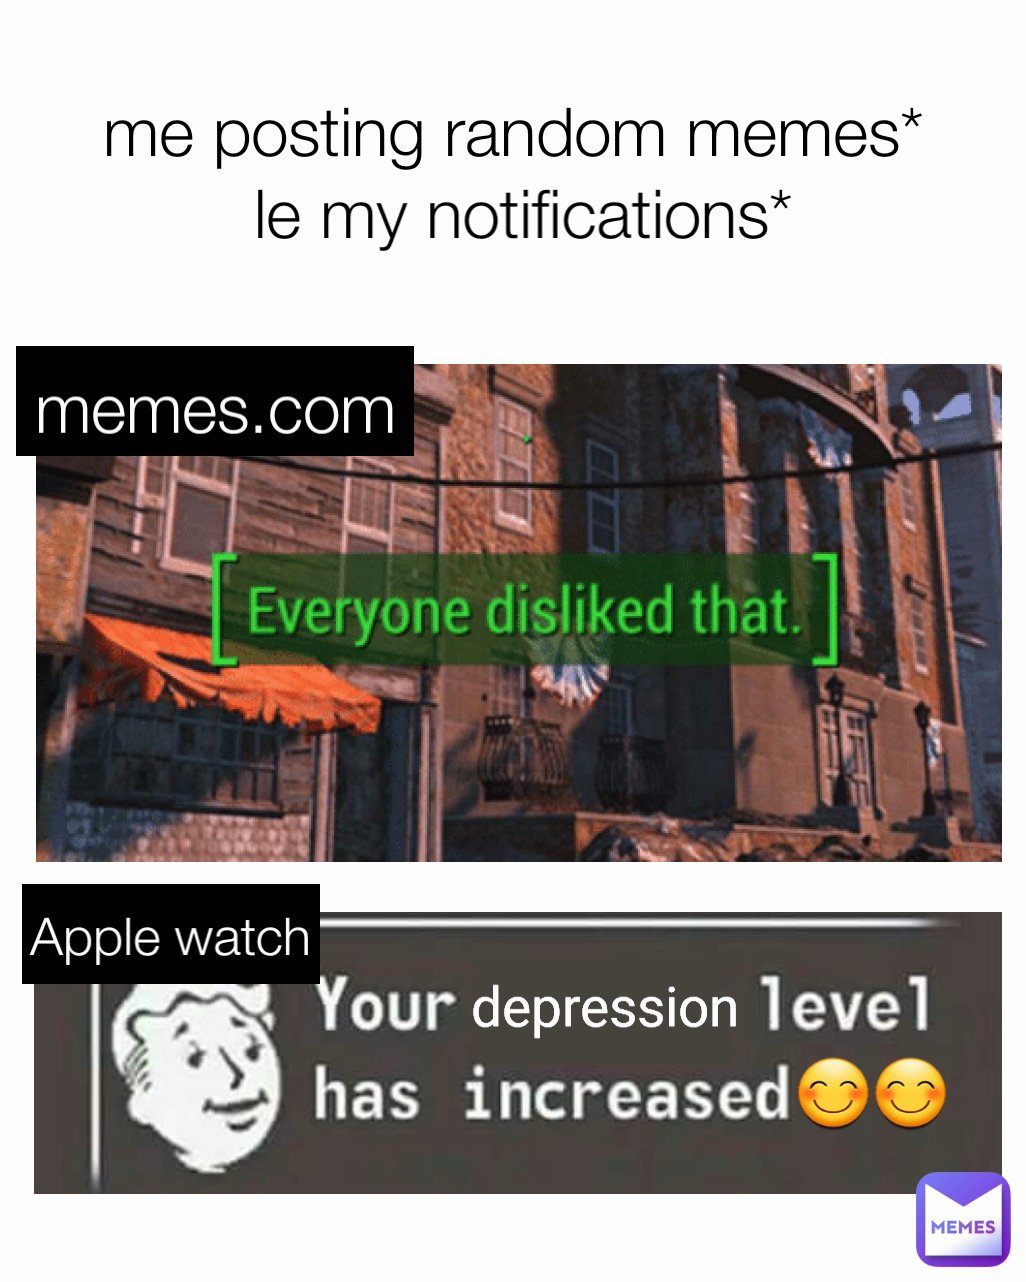 le my notifications* me posting random memes* depression  memes.com Apple watch 😊😊